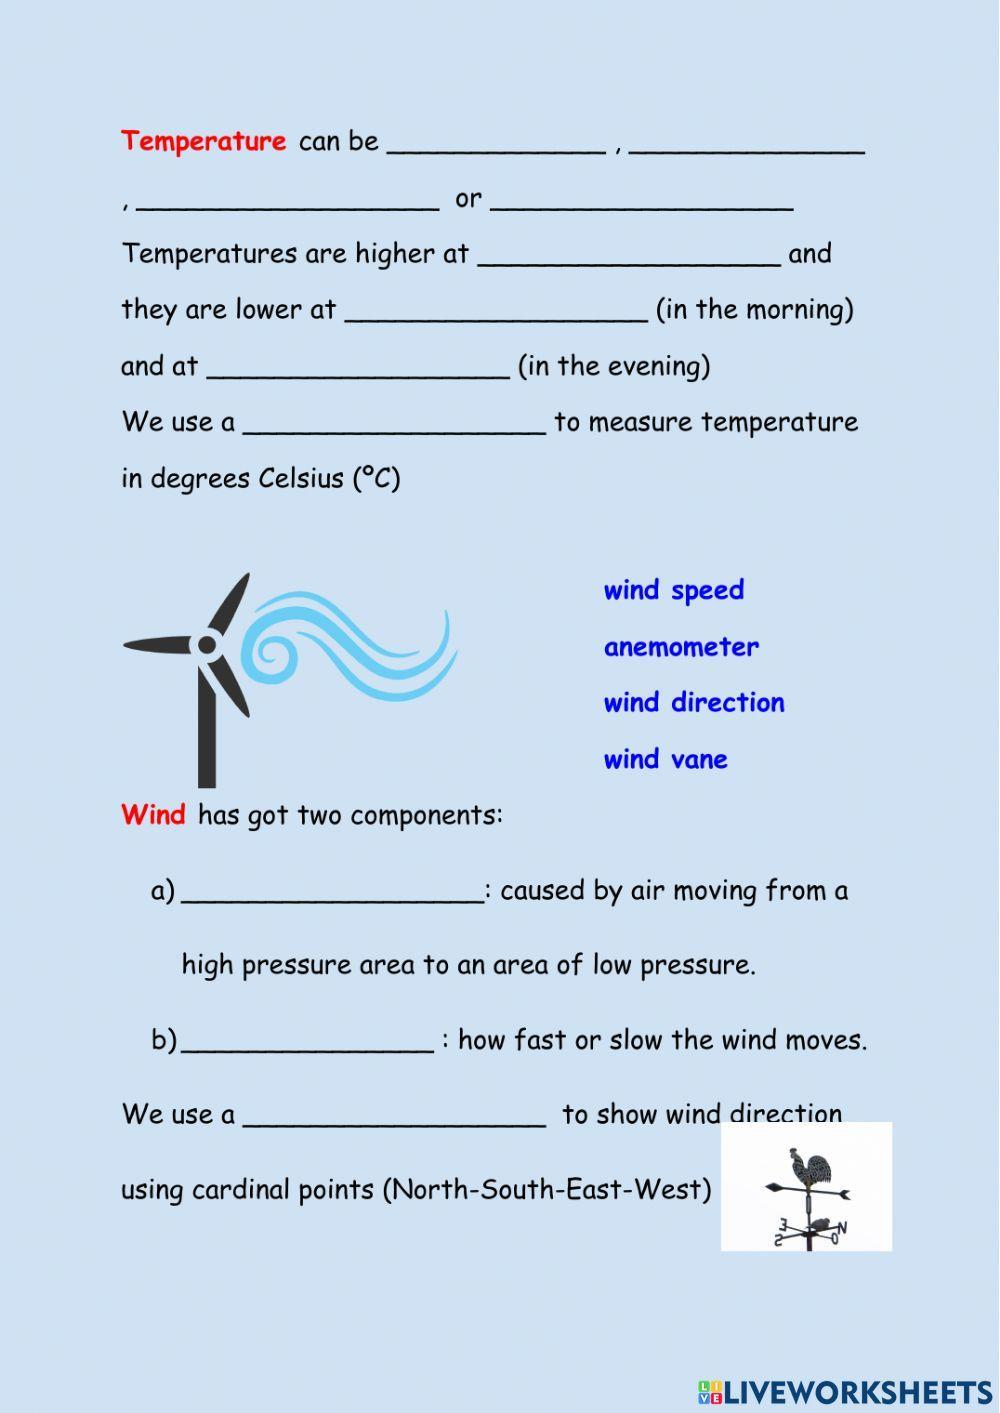 Weather elements